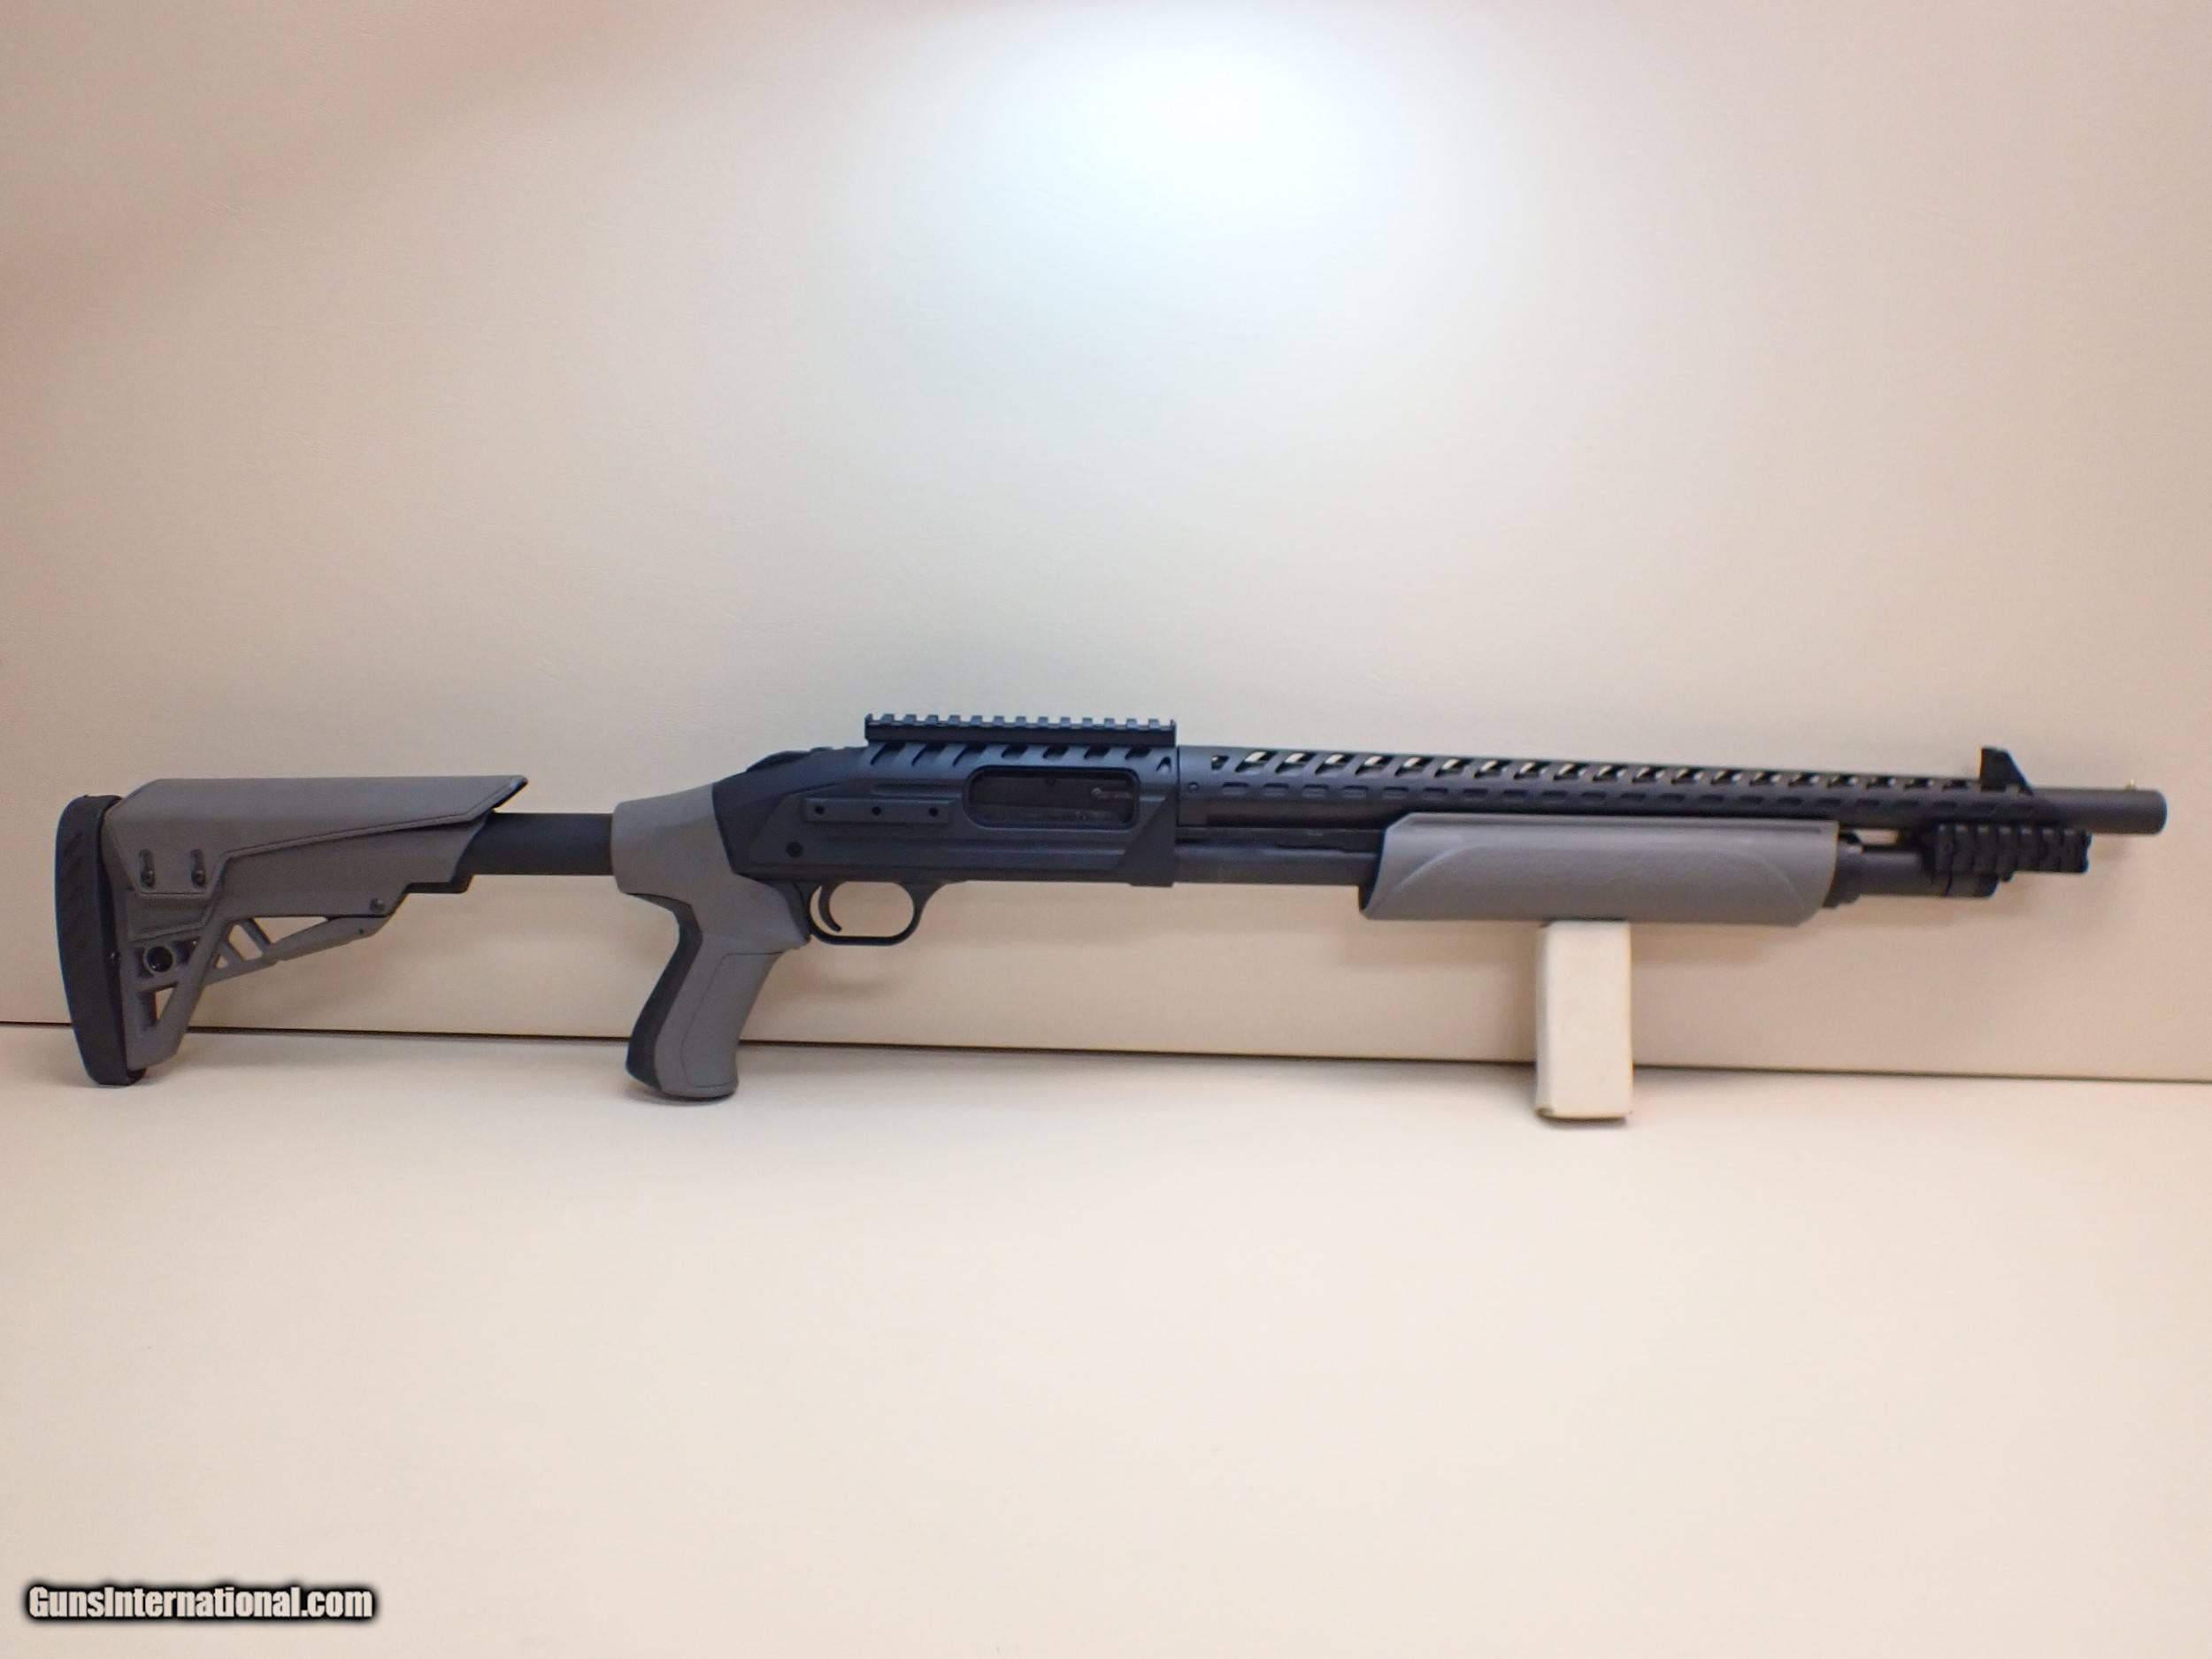 Mossberg 500 Tactical Pistol Grip Shotgun